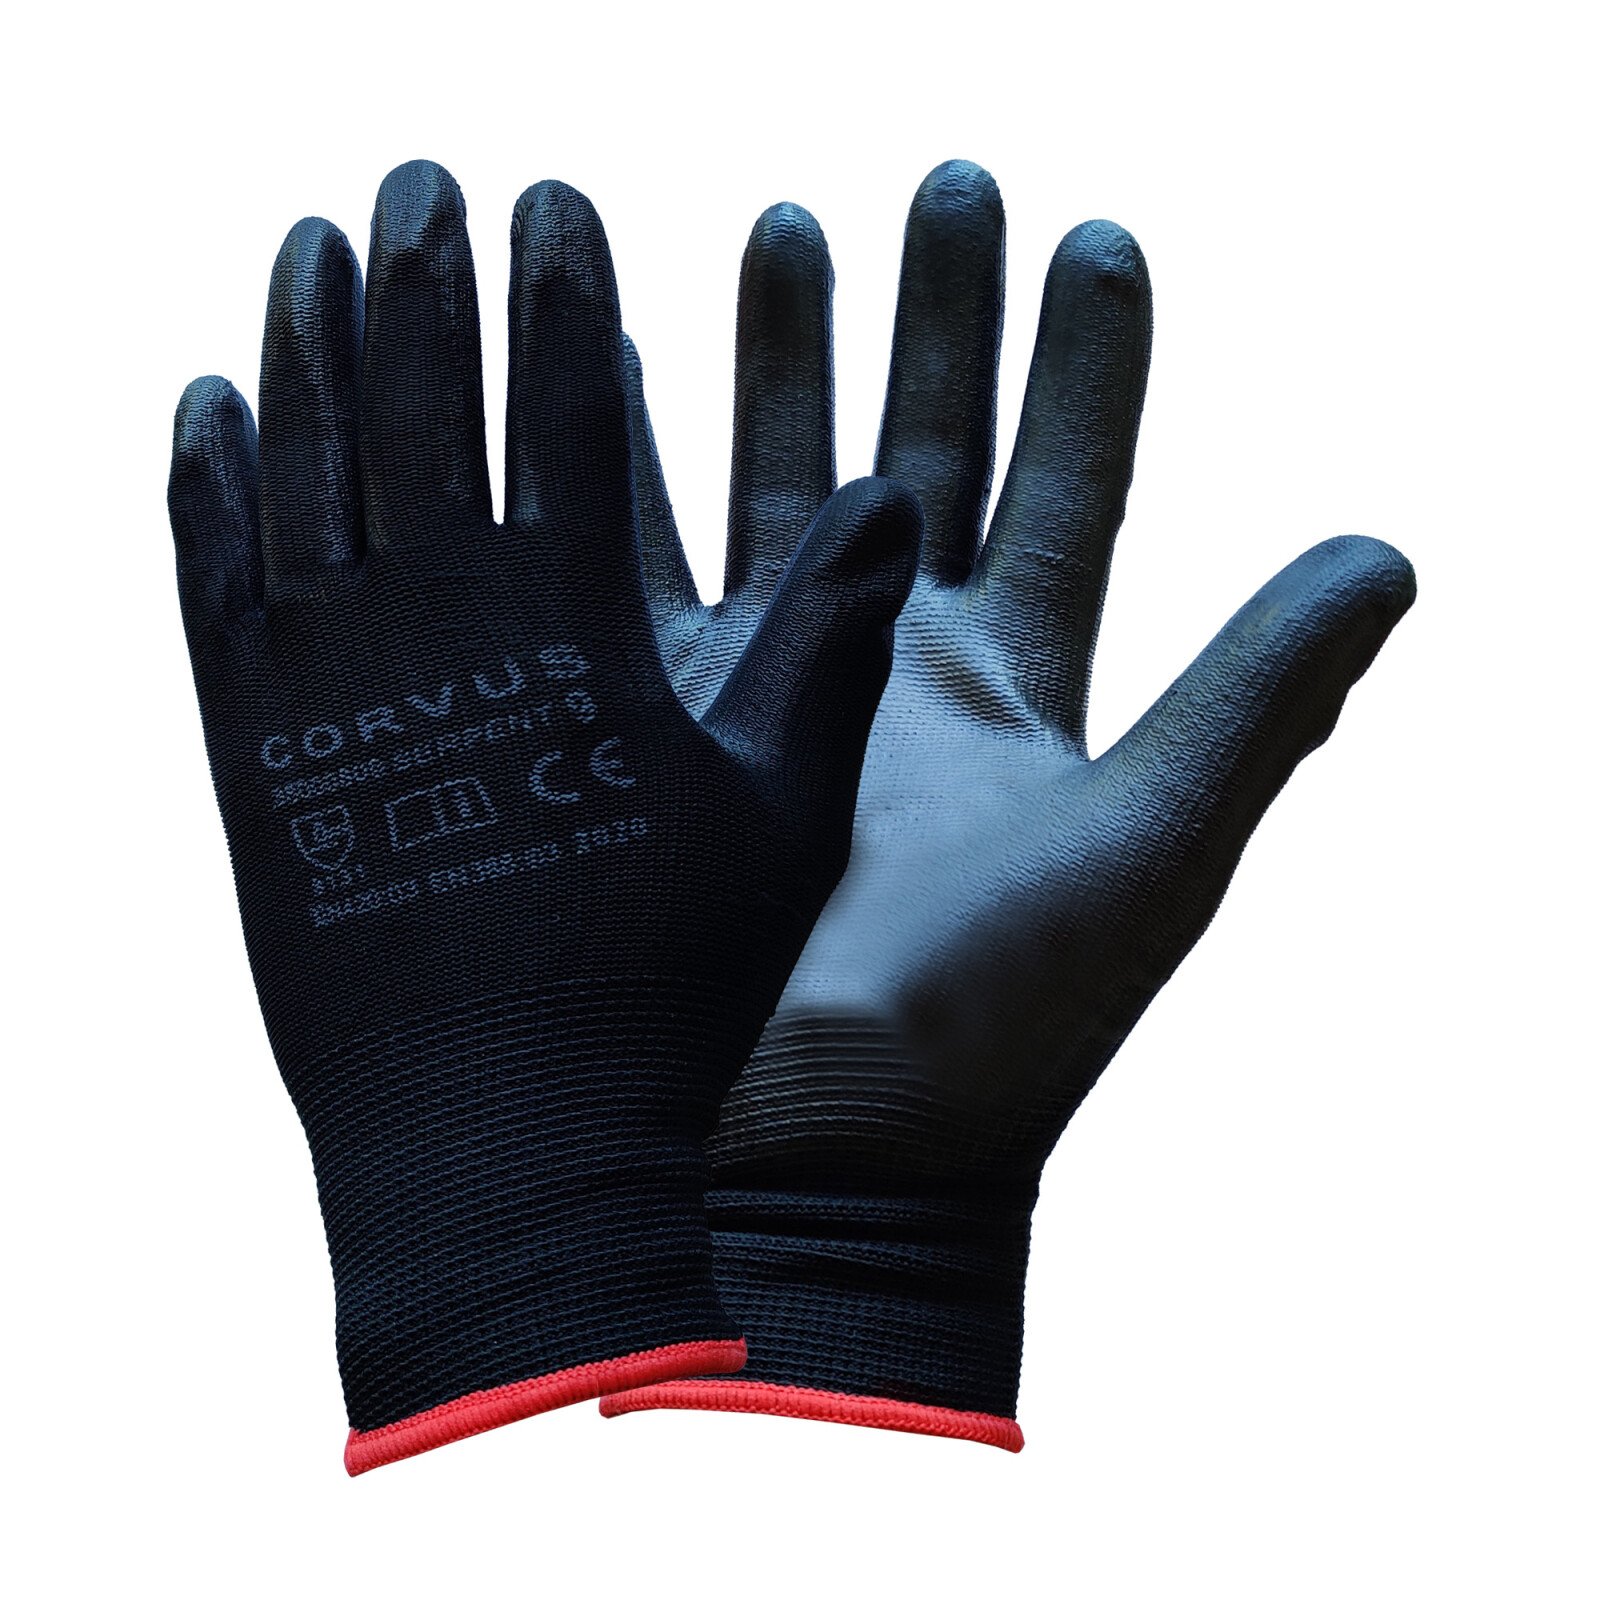 Corvus polyurethane gloves - Size 9 - M thumb